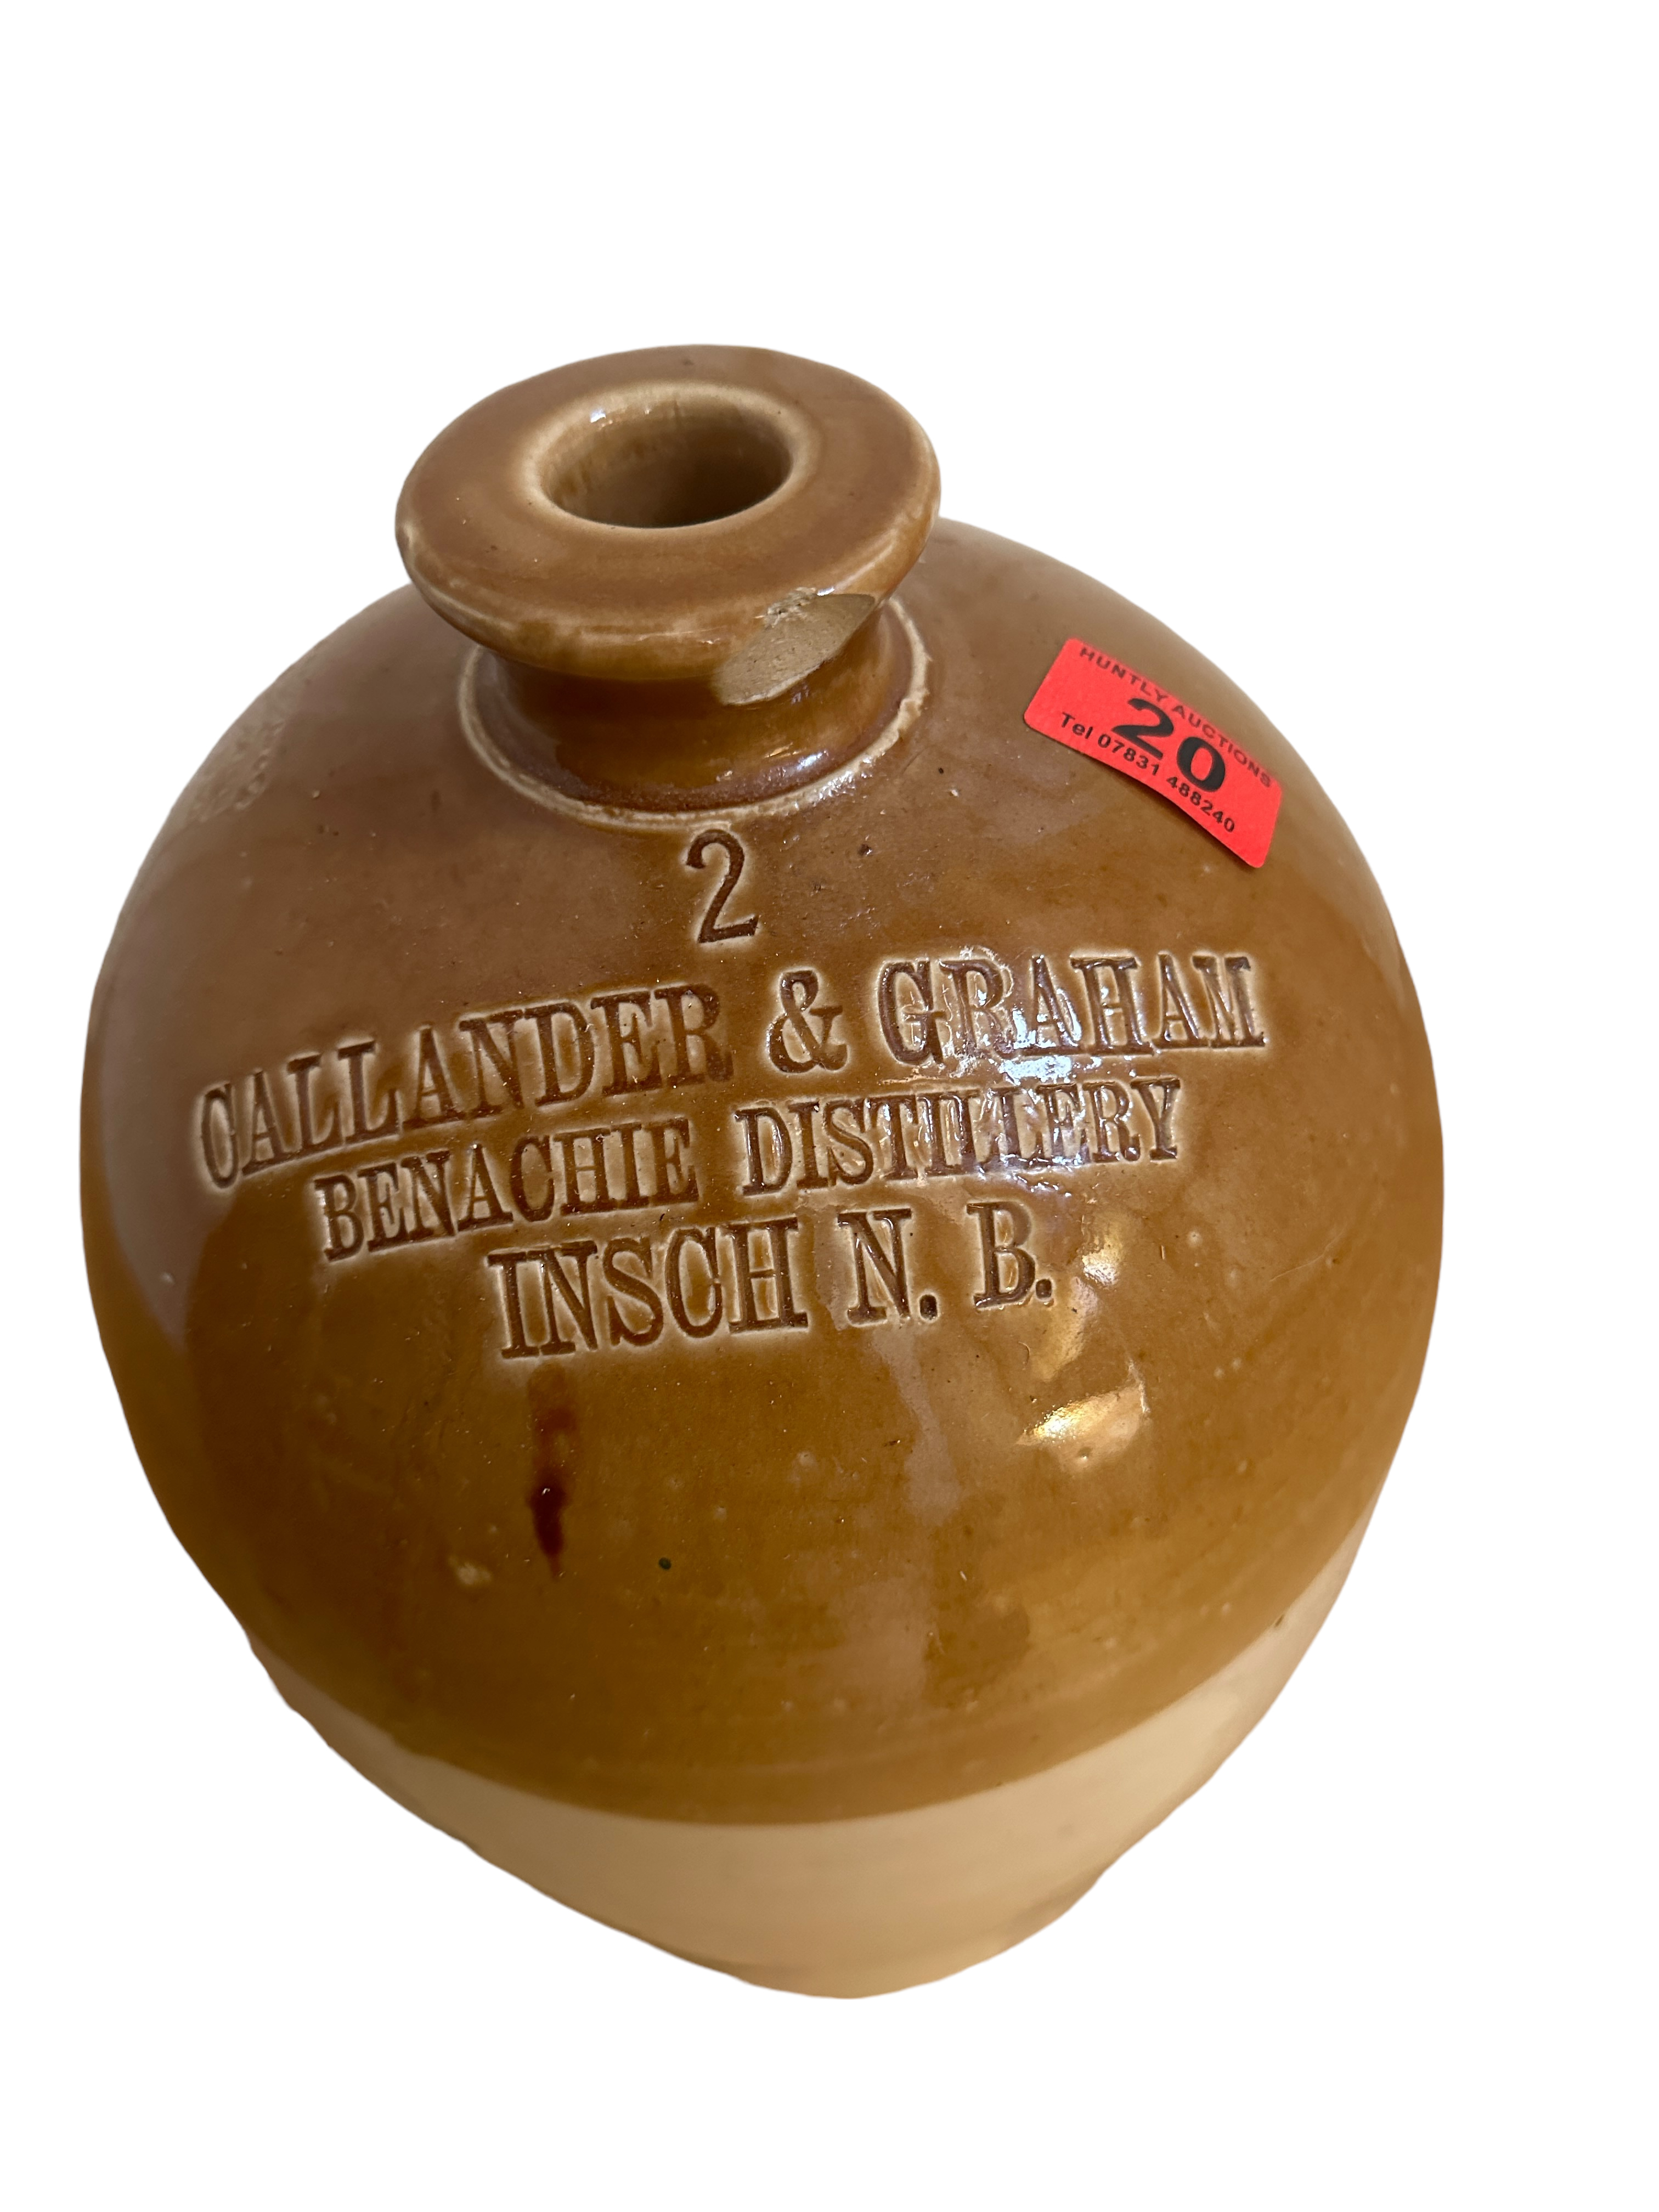 Antique Benachie Distillery Insch (Callander&Graham) Stoneware Whisky Flagon 15" tall. - Image 3 of 10